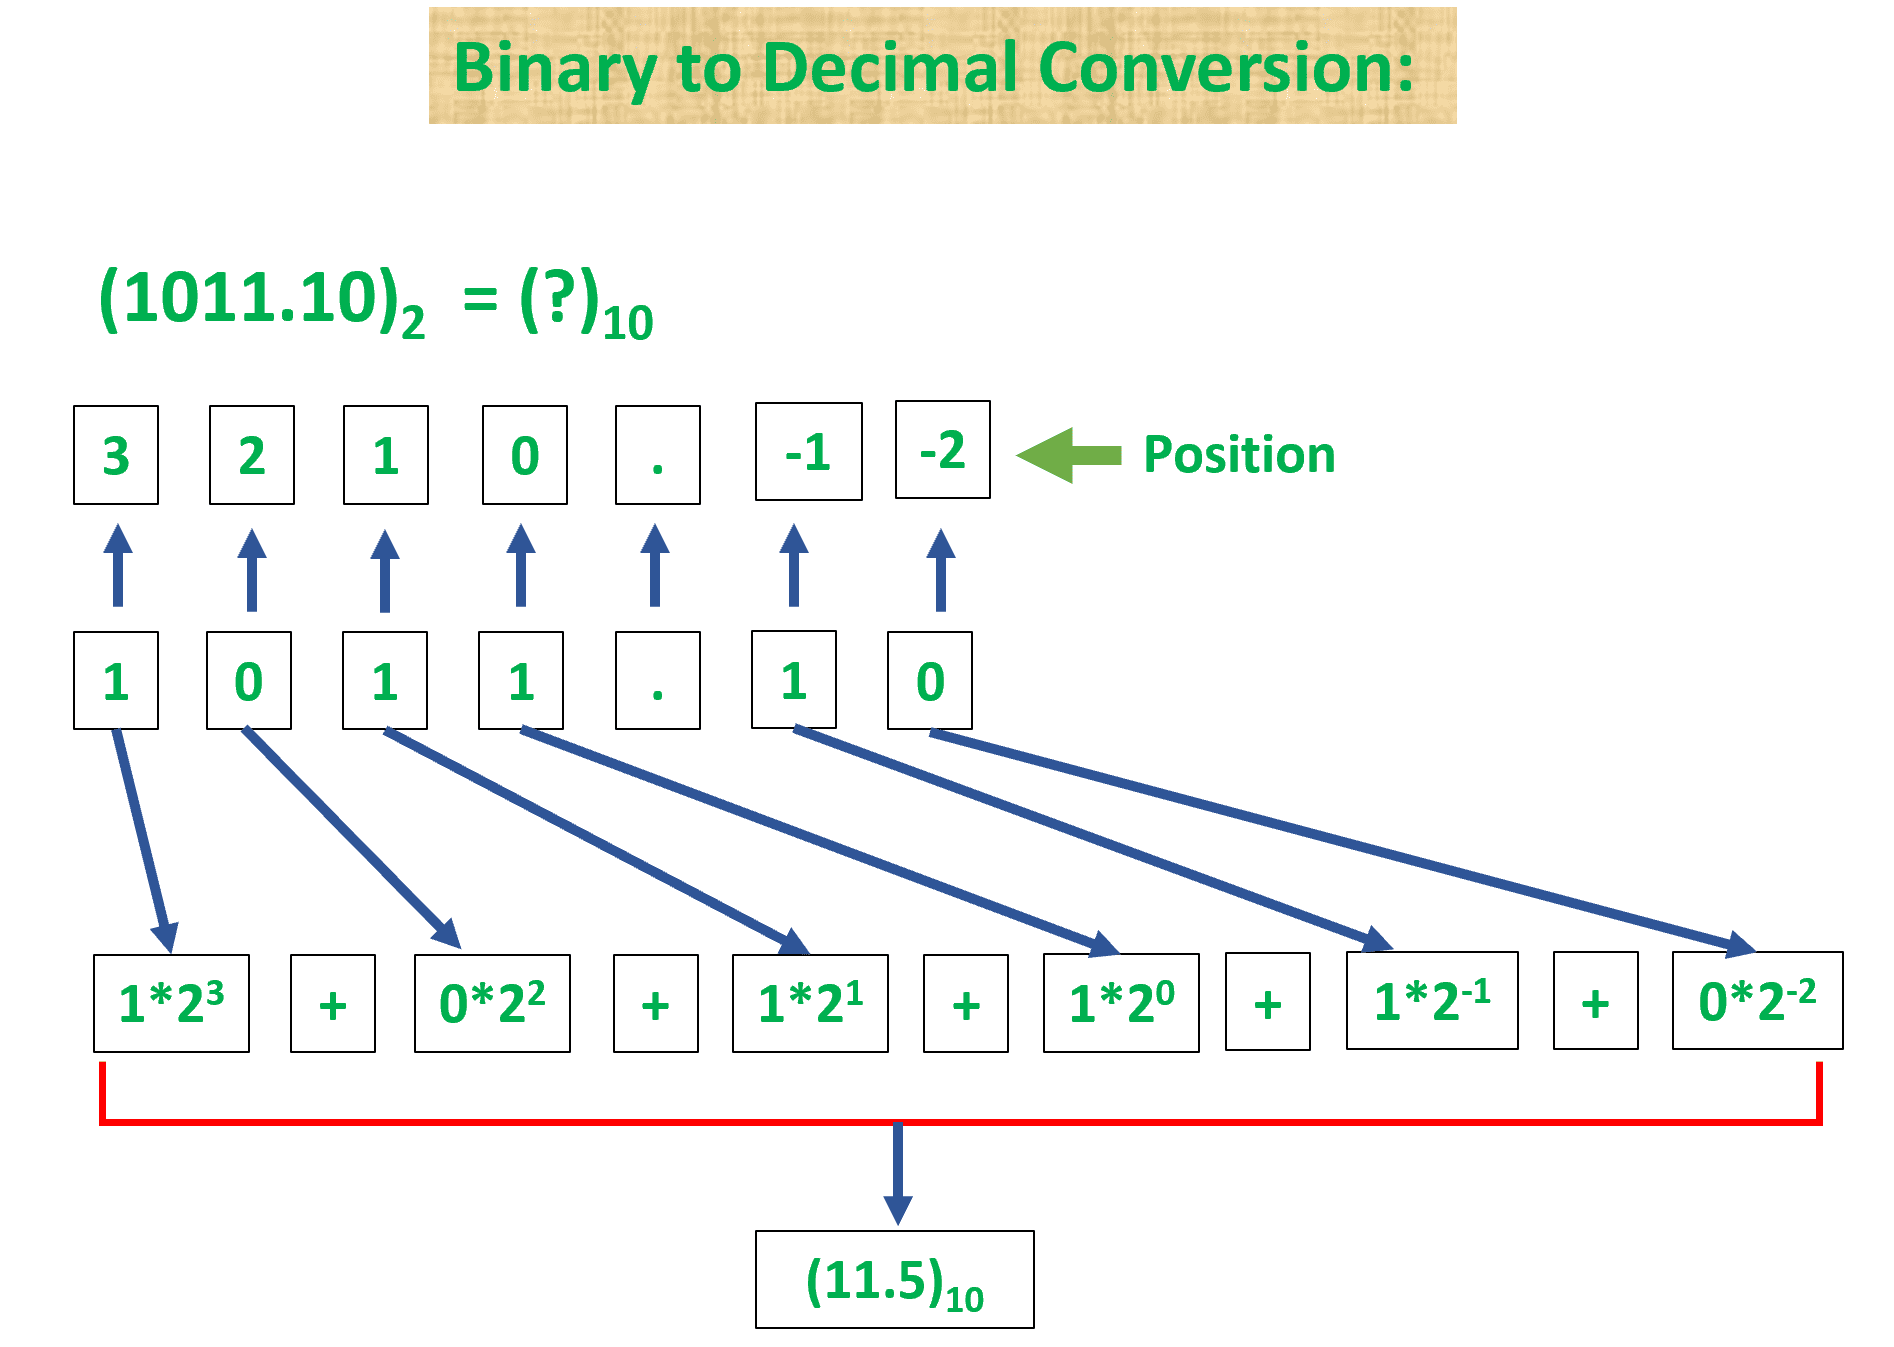 Binary to decimal conversion